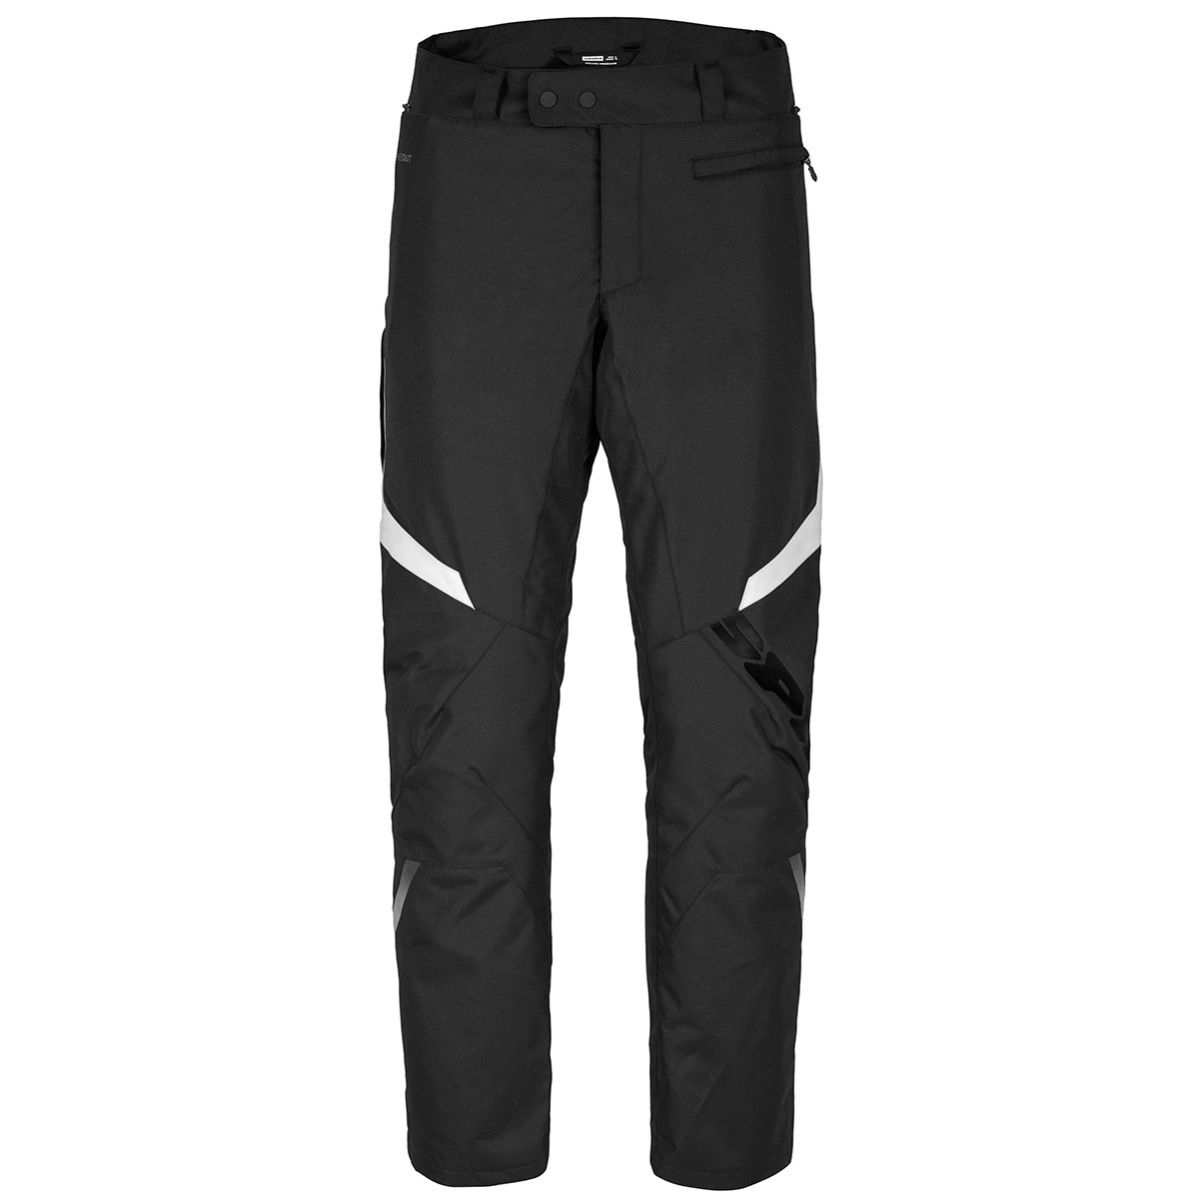 Image of Spidi Sportmaster Pants Black White Size XL ID 8030161478143